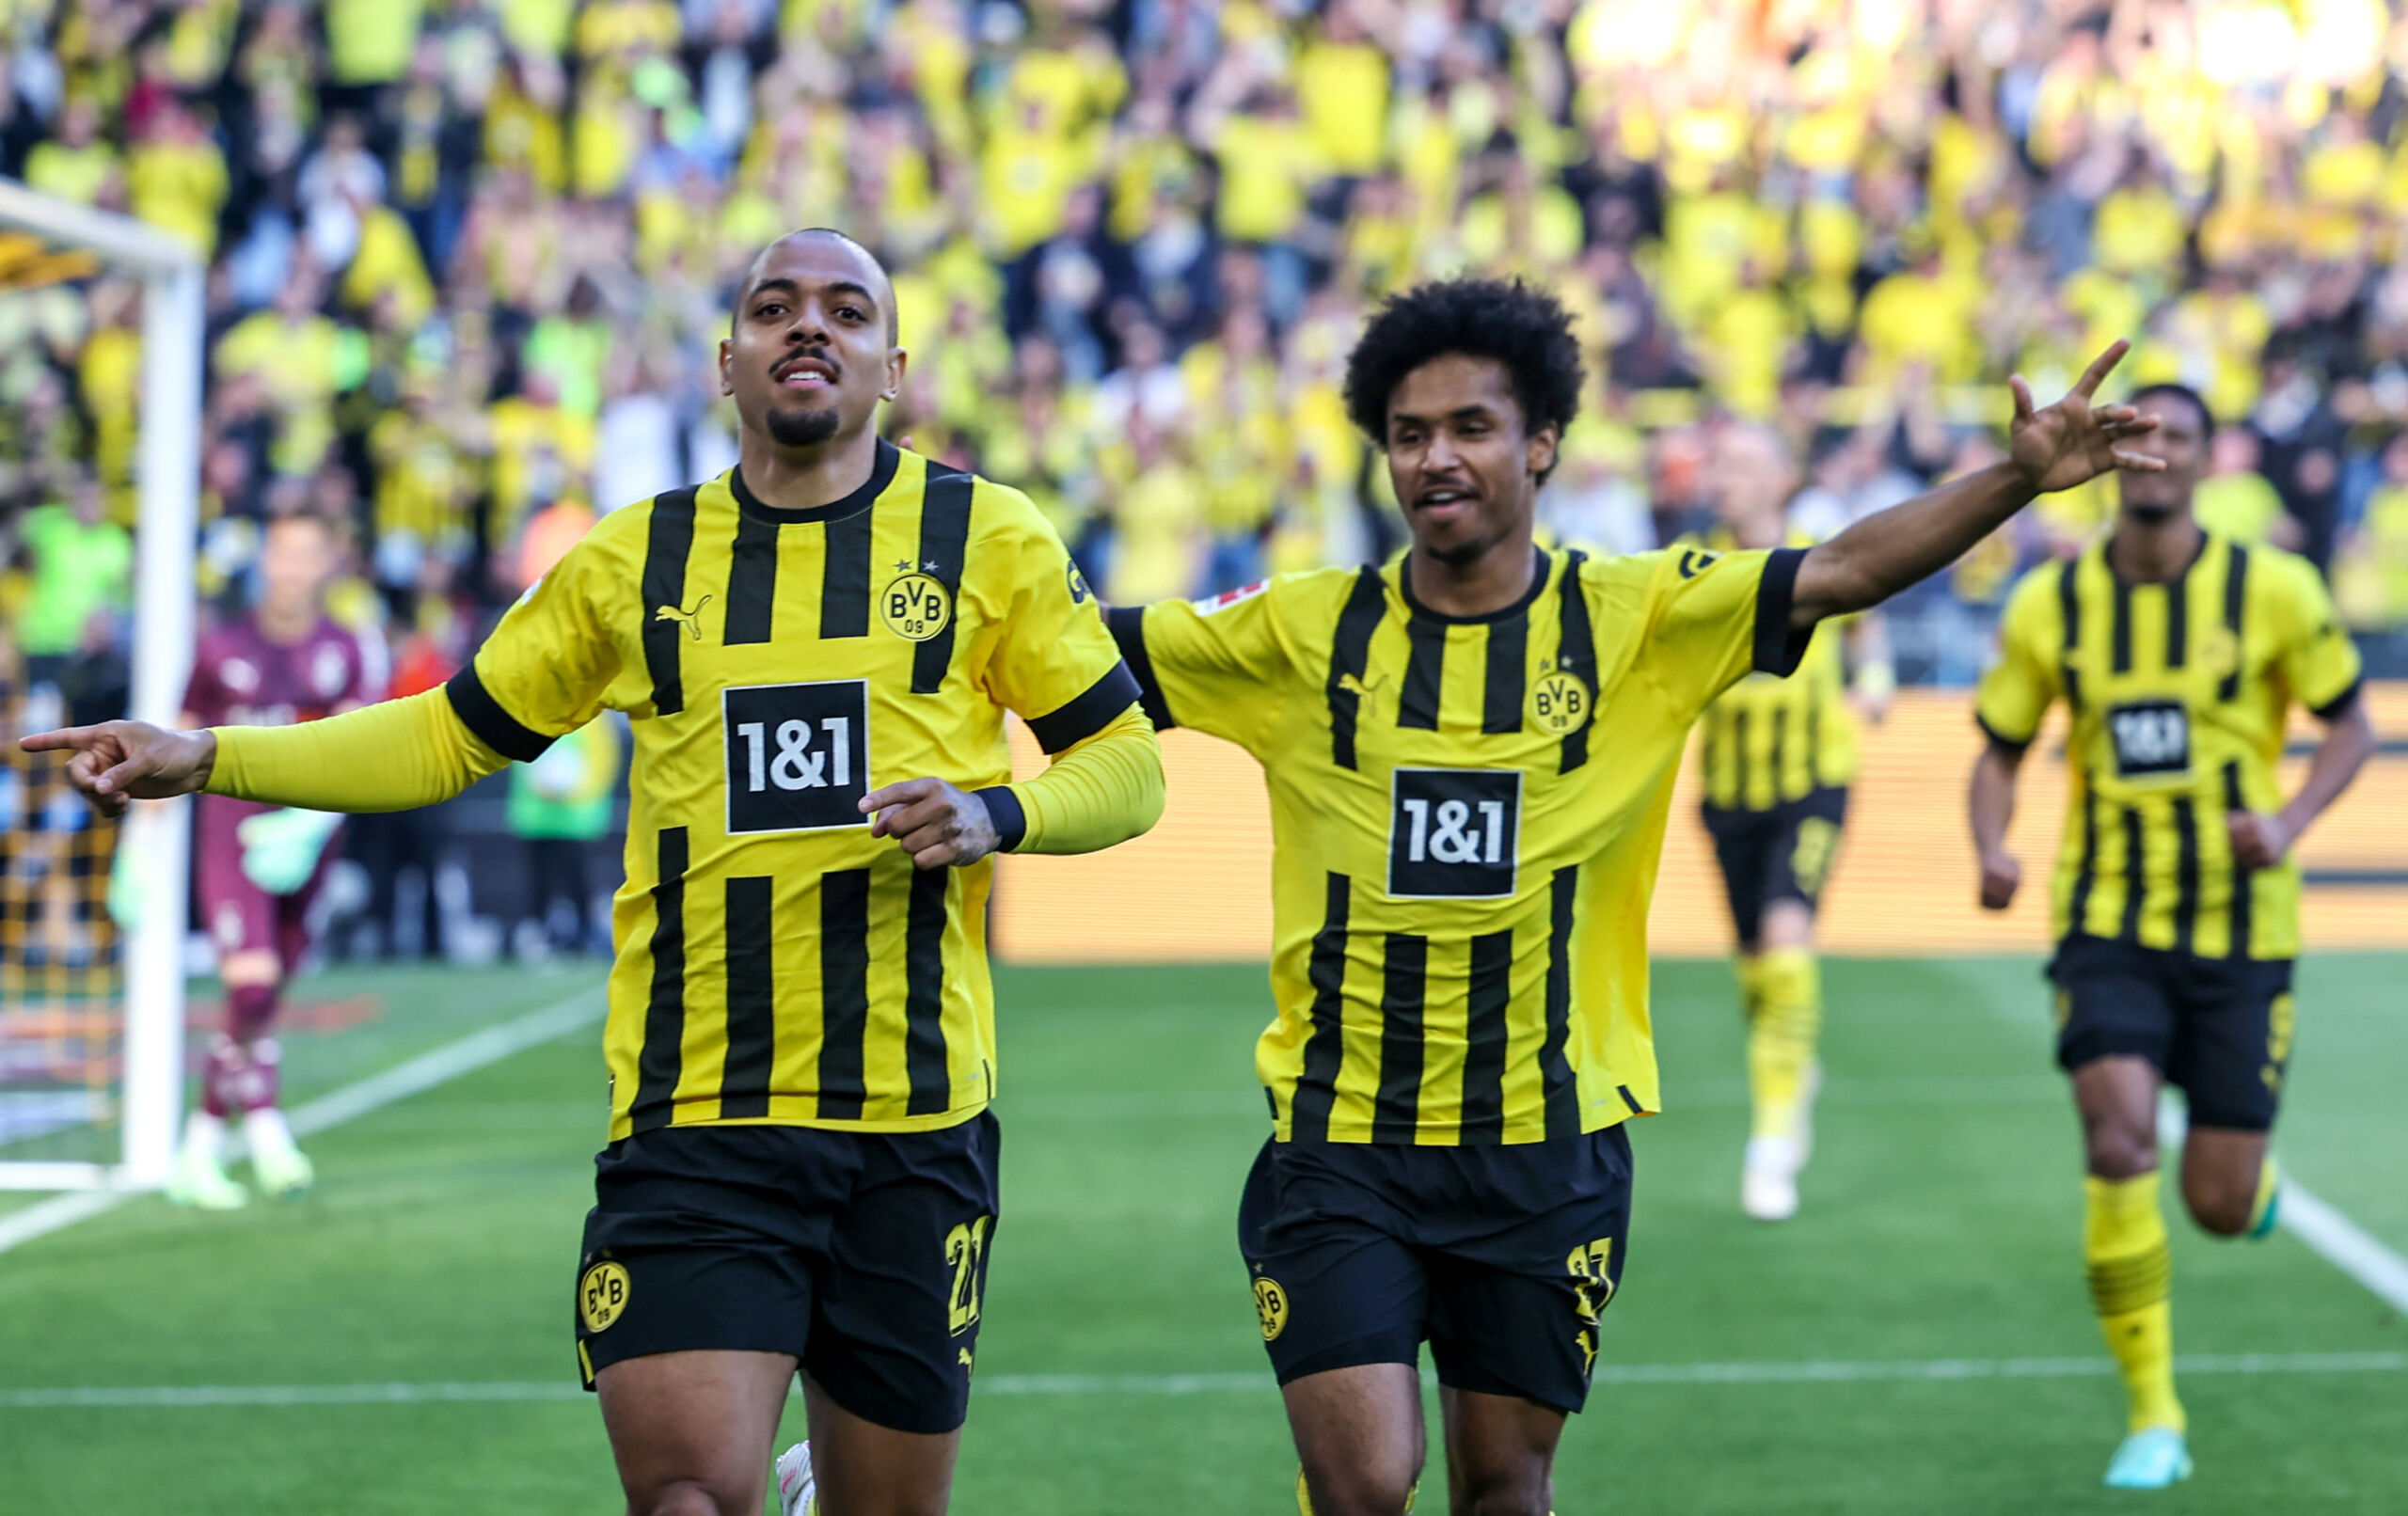 BVB Buzz on X: Borussia Dortmund's home kit for the 2022/23